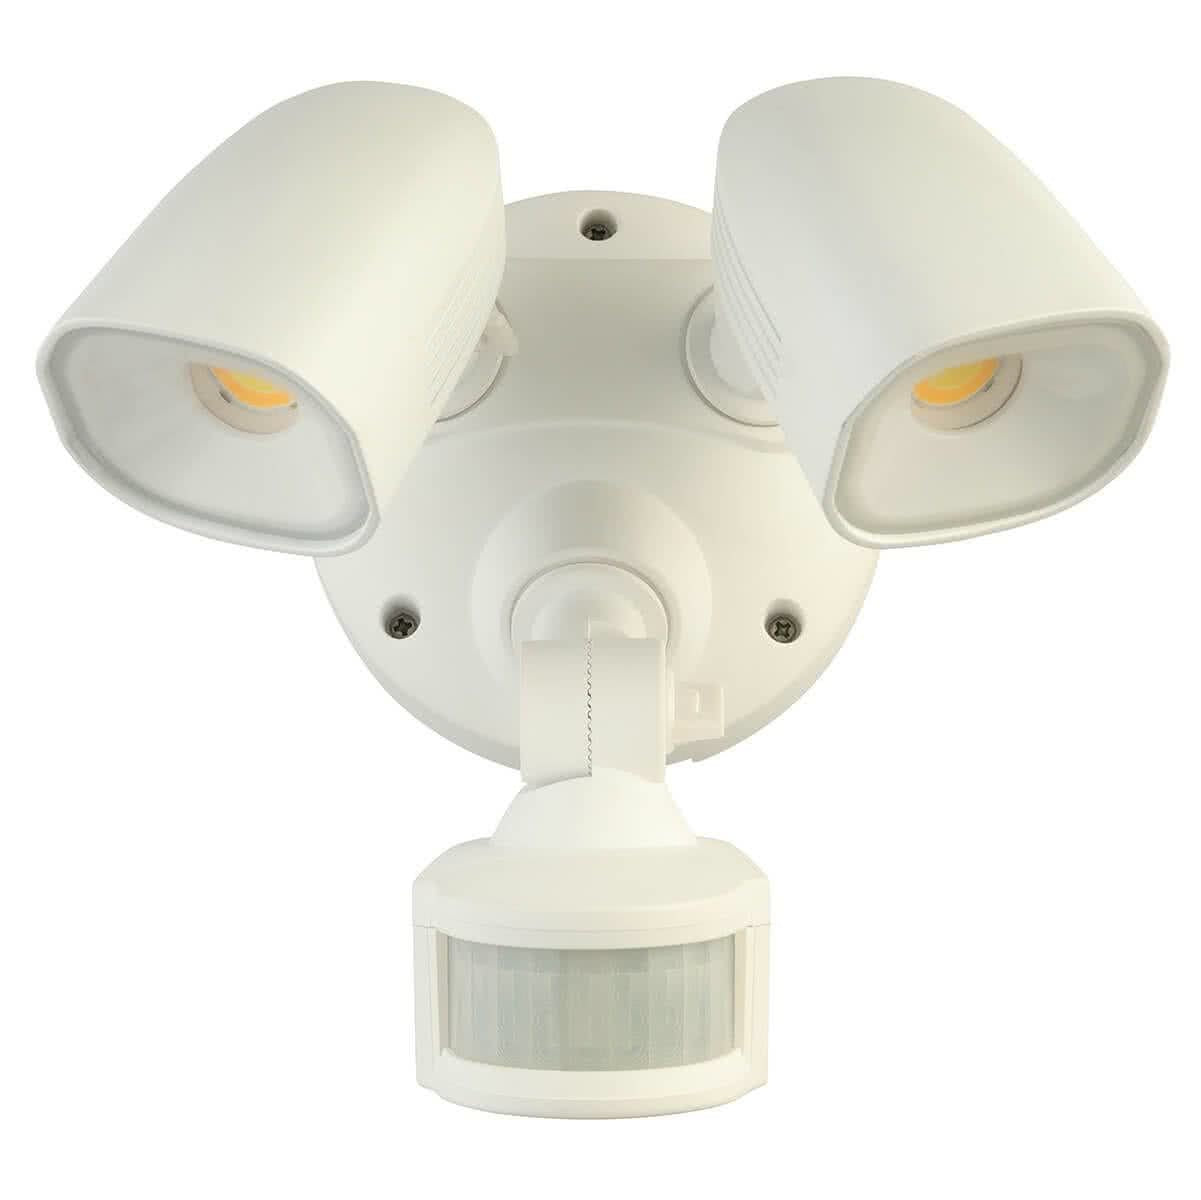 Shielder 20w Cob LED Twin Adjustable Outdoor Spotlight With Motion Sensor